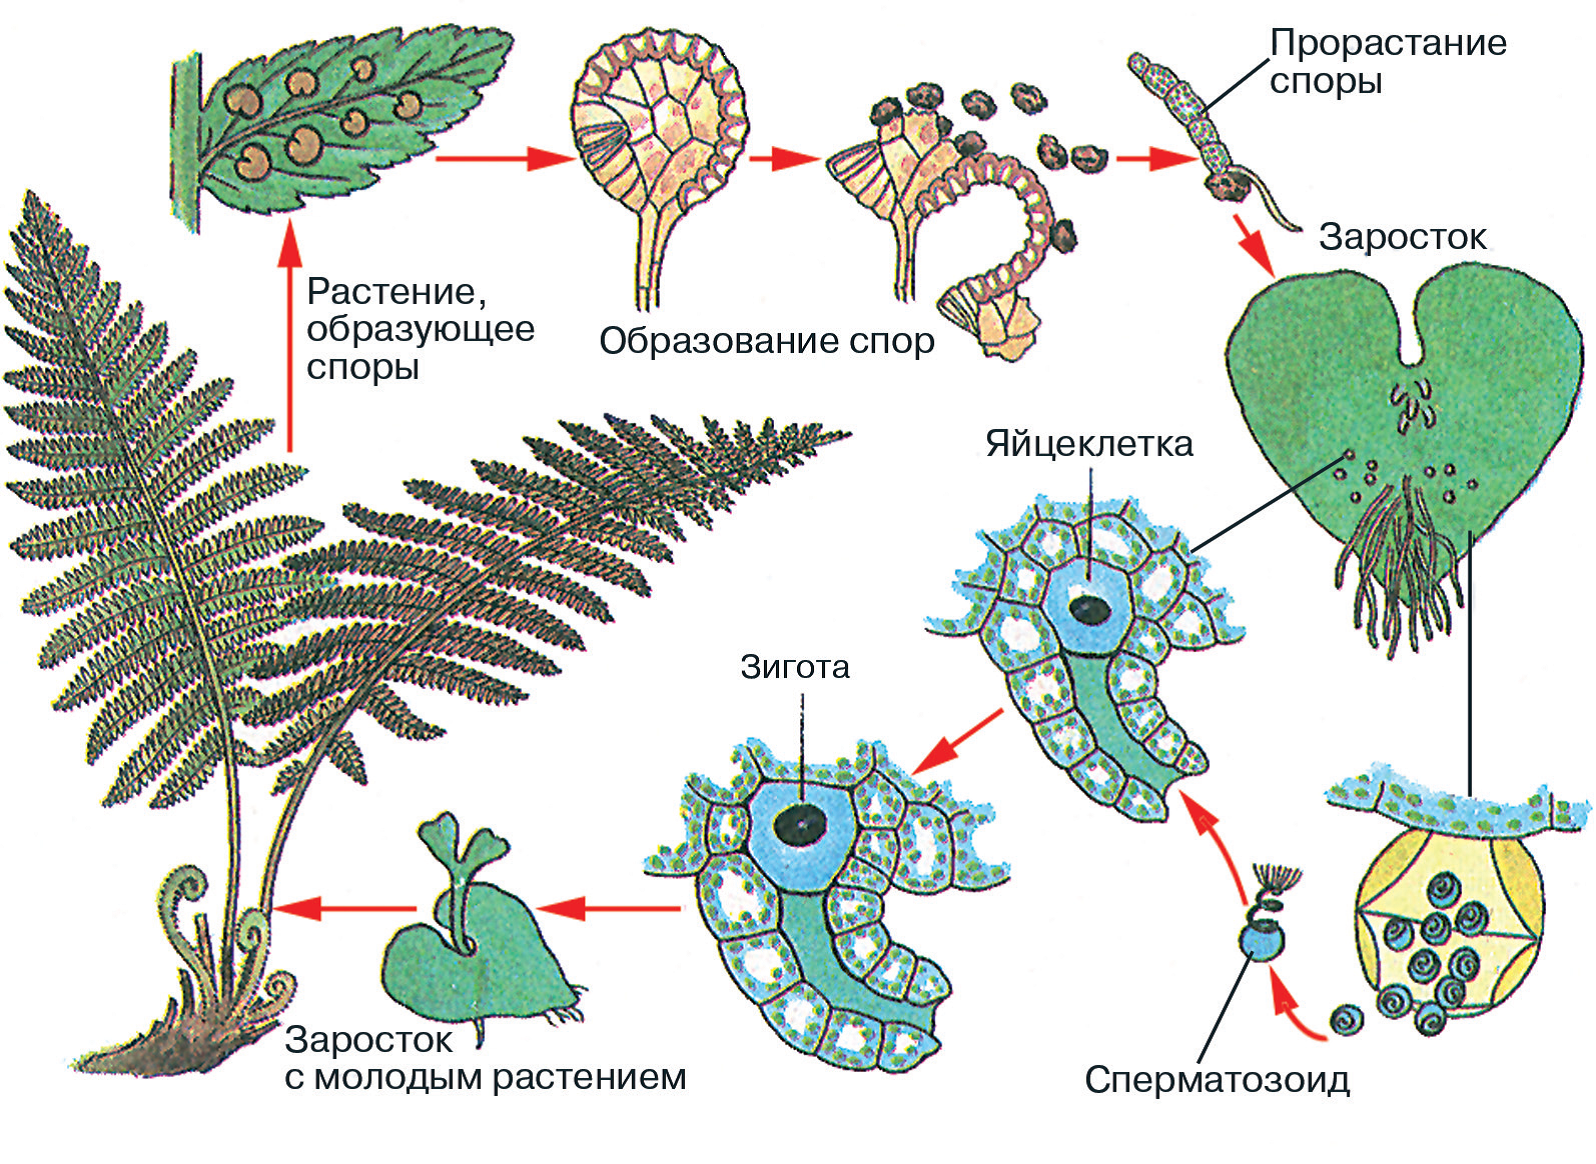 Цикл развития папоротника. Размножение папоротников цикл развития. Папоротники строение и размножение. Жизненный цикл папоротника схема.